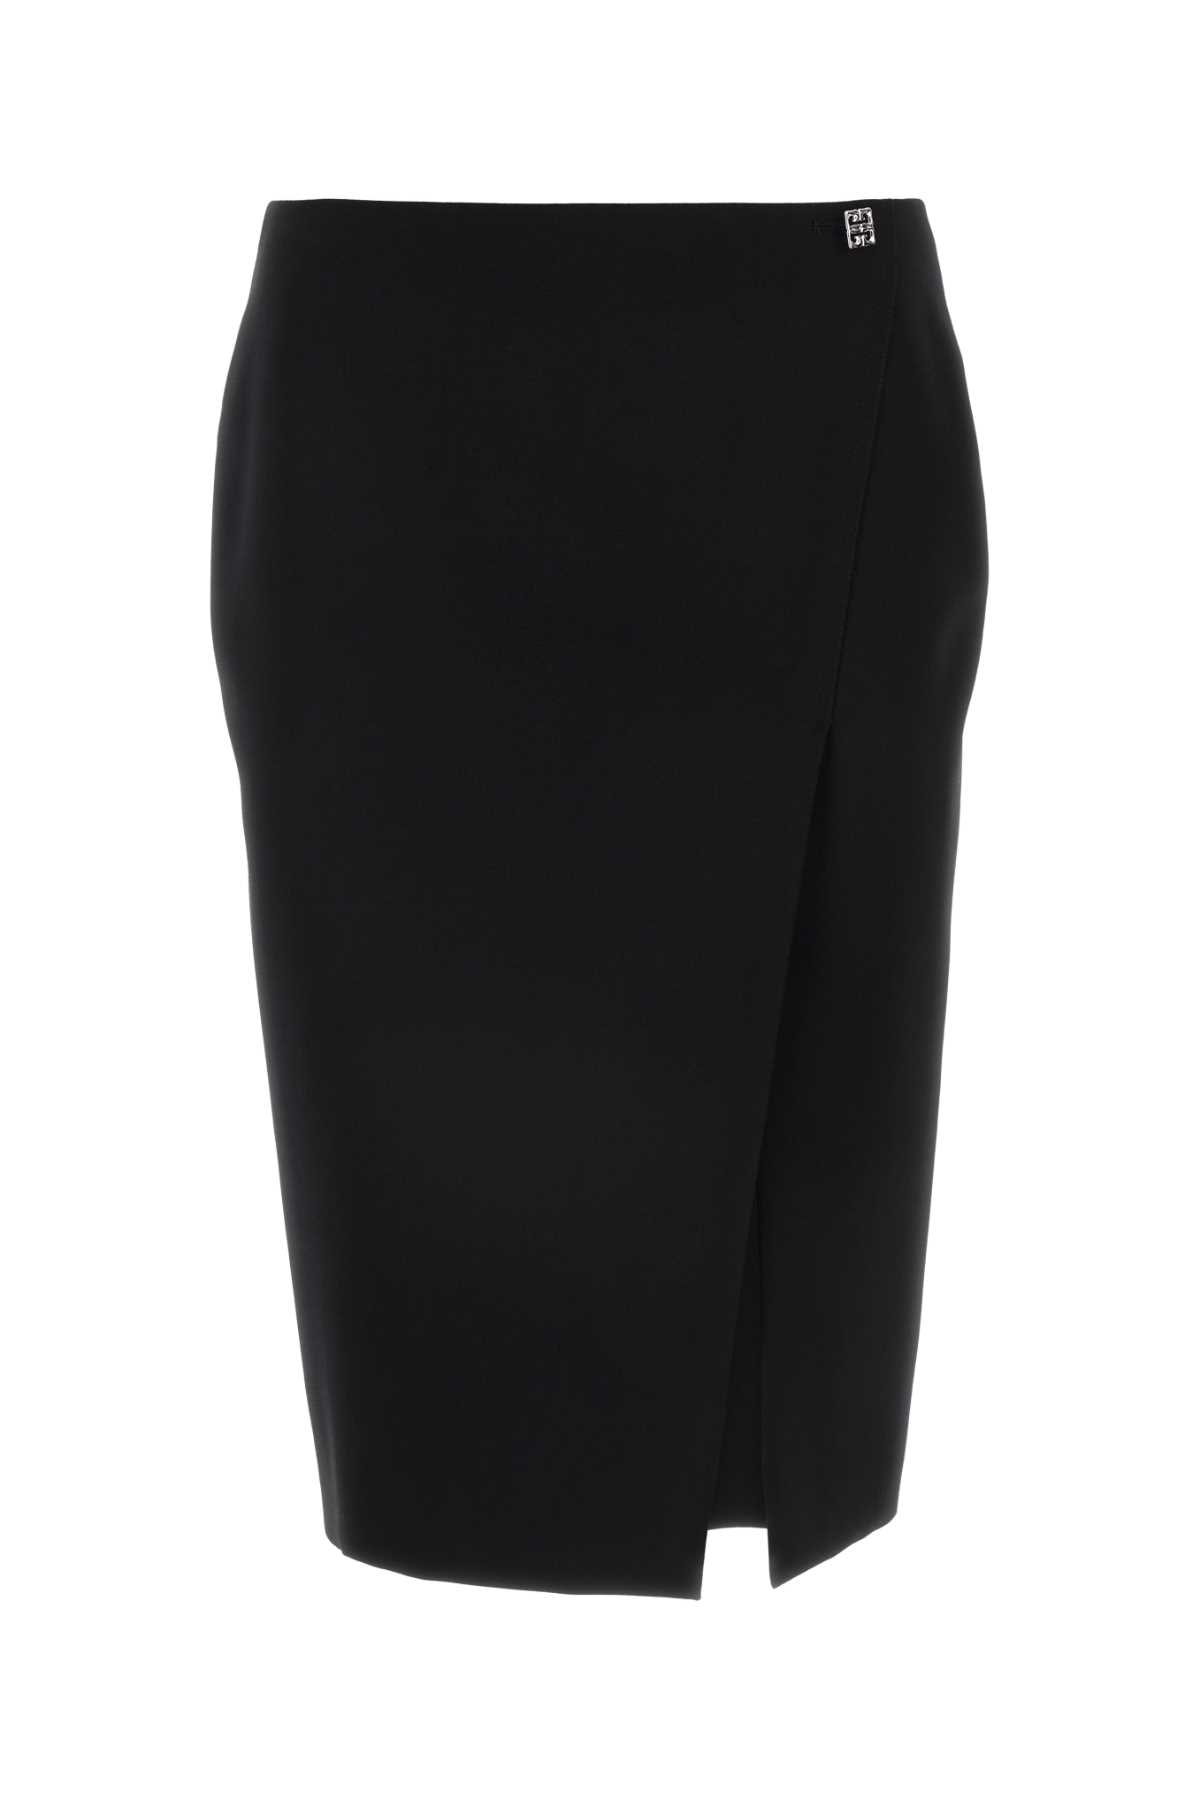 Shop Givenchy Black Wool Skirt